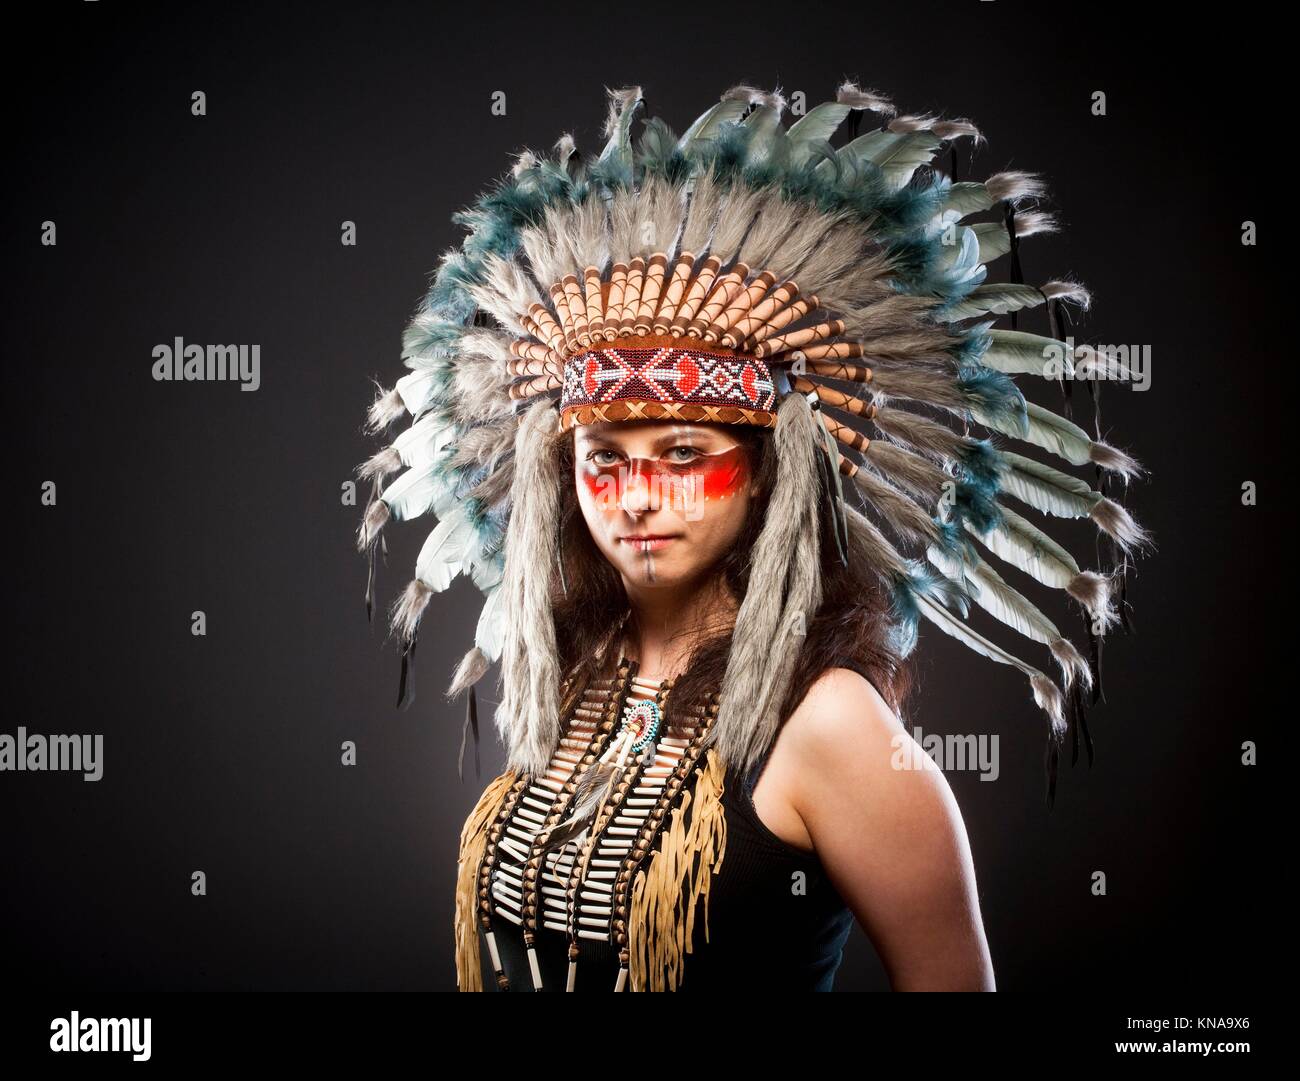 Native American Indian Chief Headdress Stock Photos & Native American ...